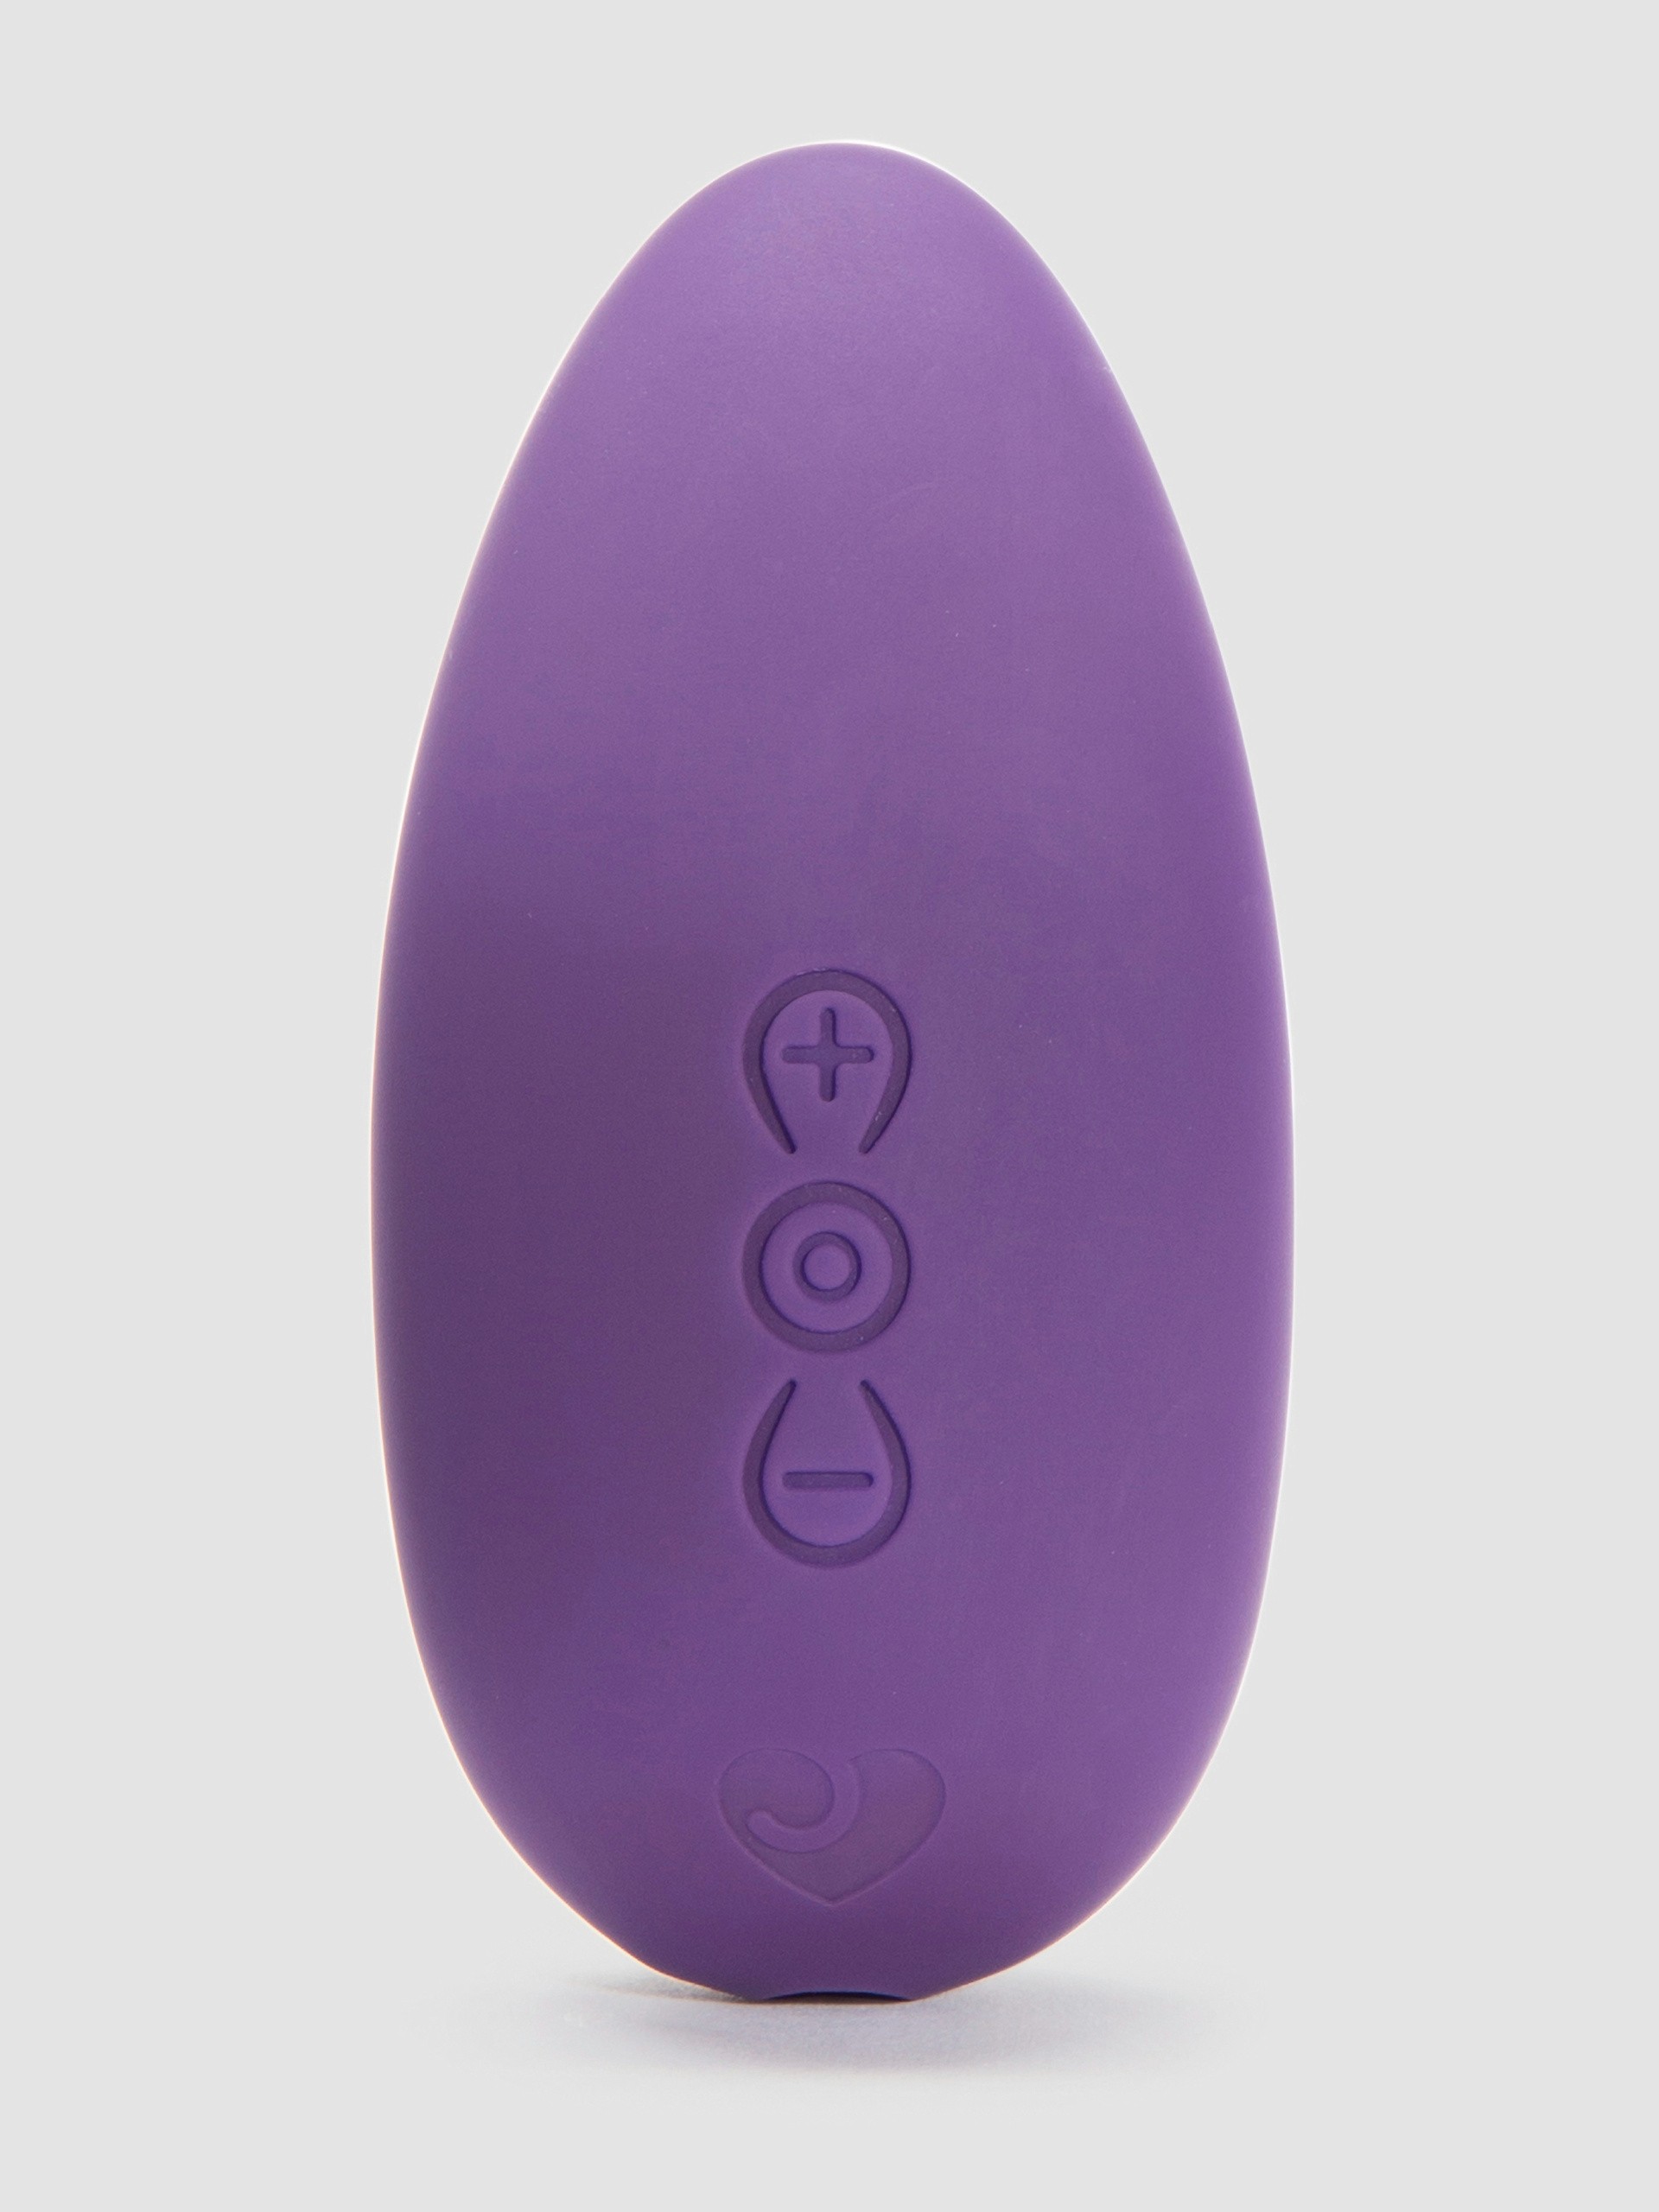 Desire Luxury Rechargeable Clitoral Vibrator - Purple